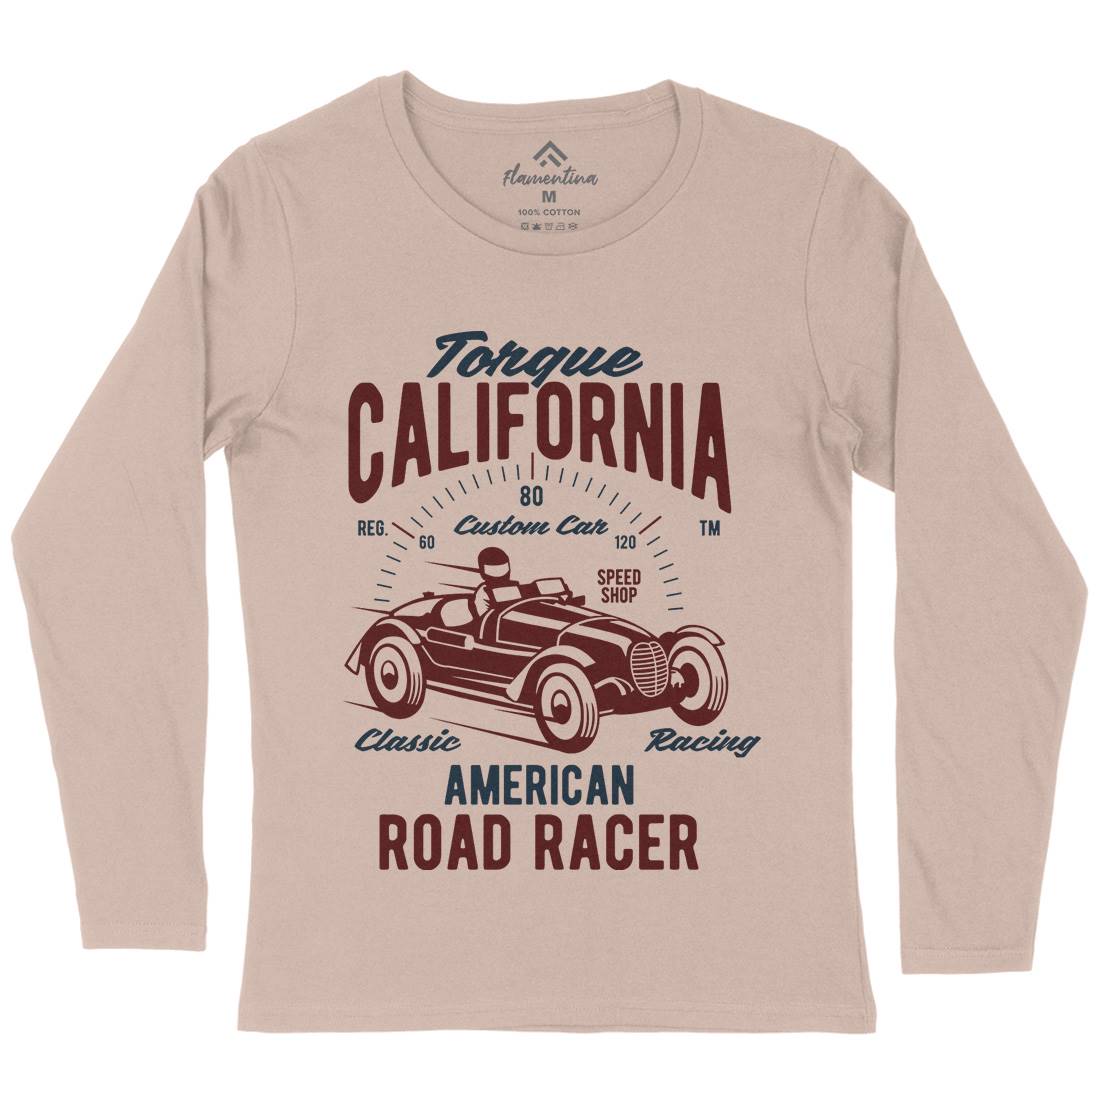 Torque California Womens Long Sleeve T-Shirt Cars B468